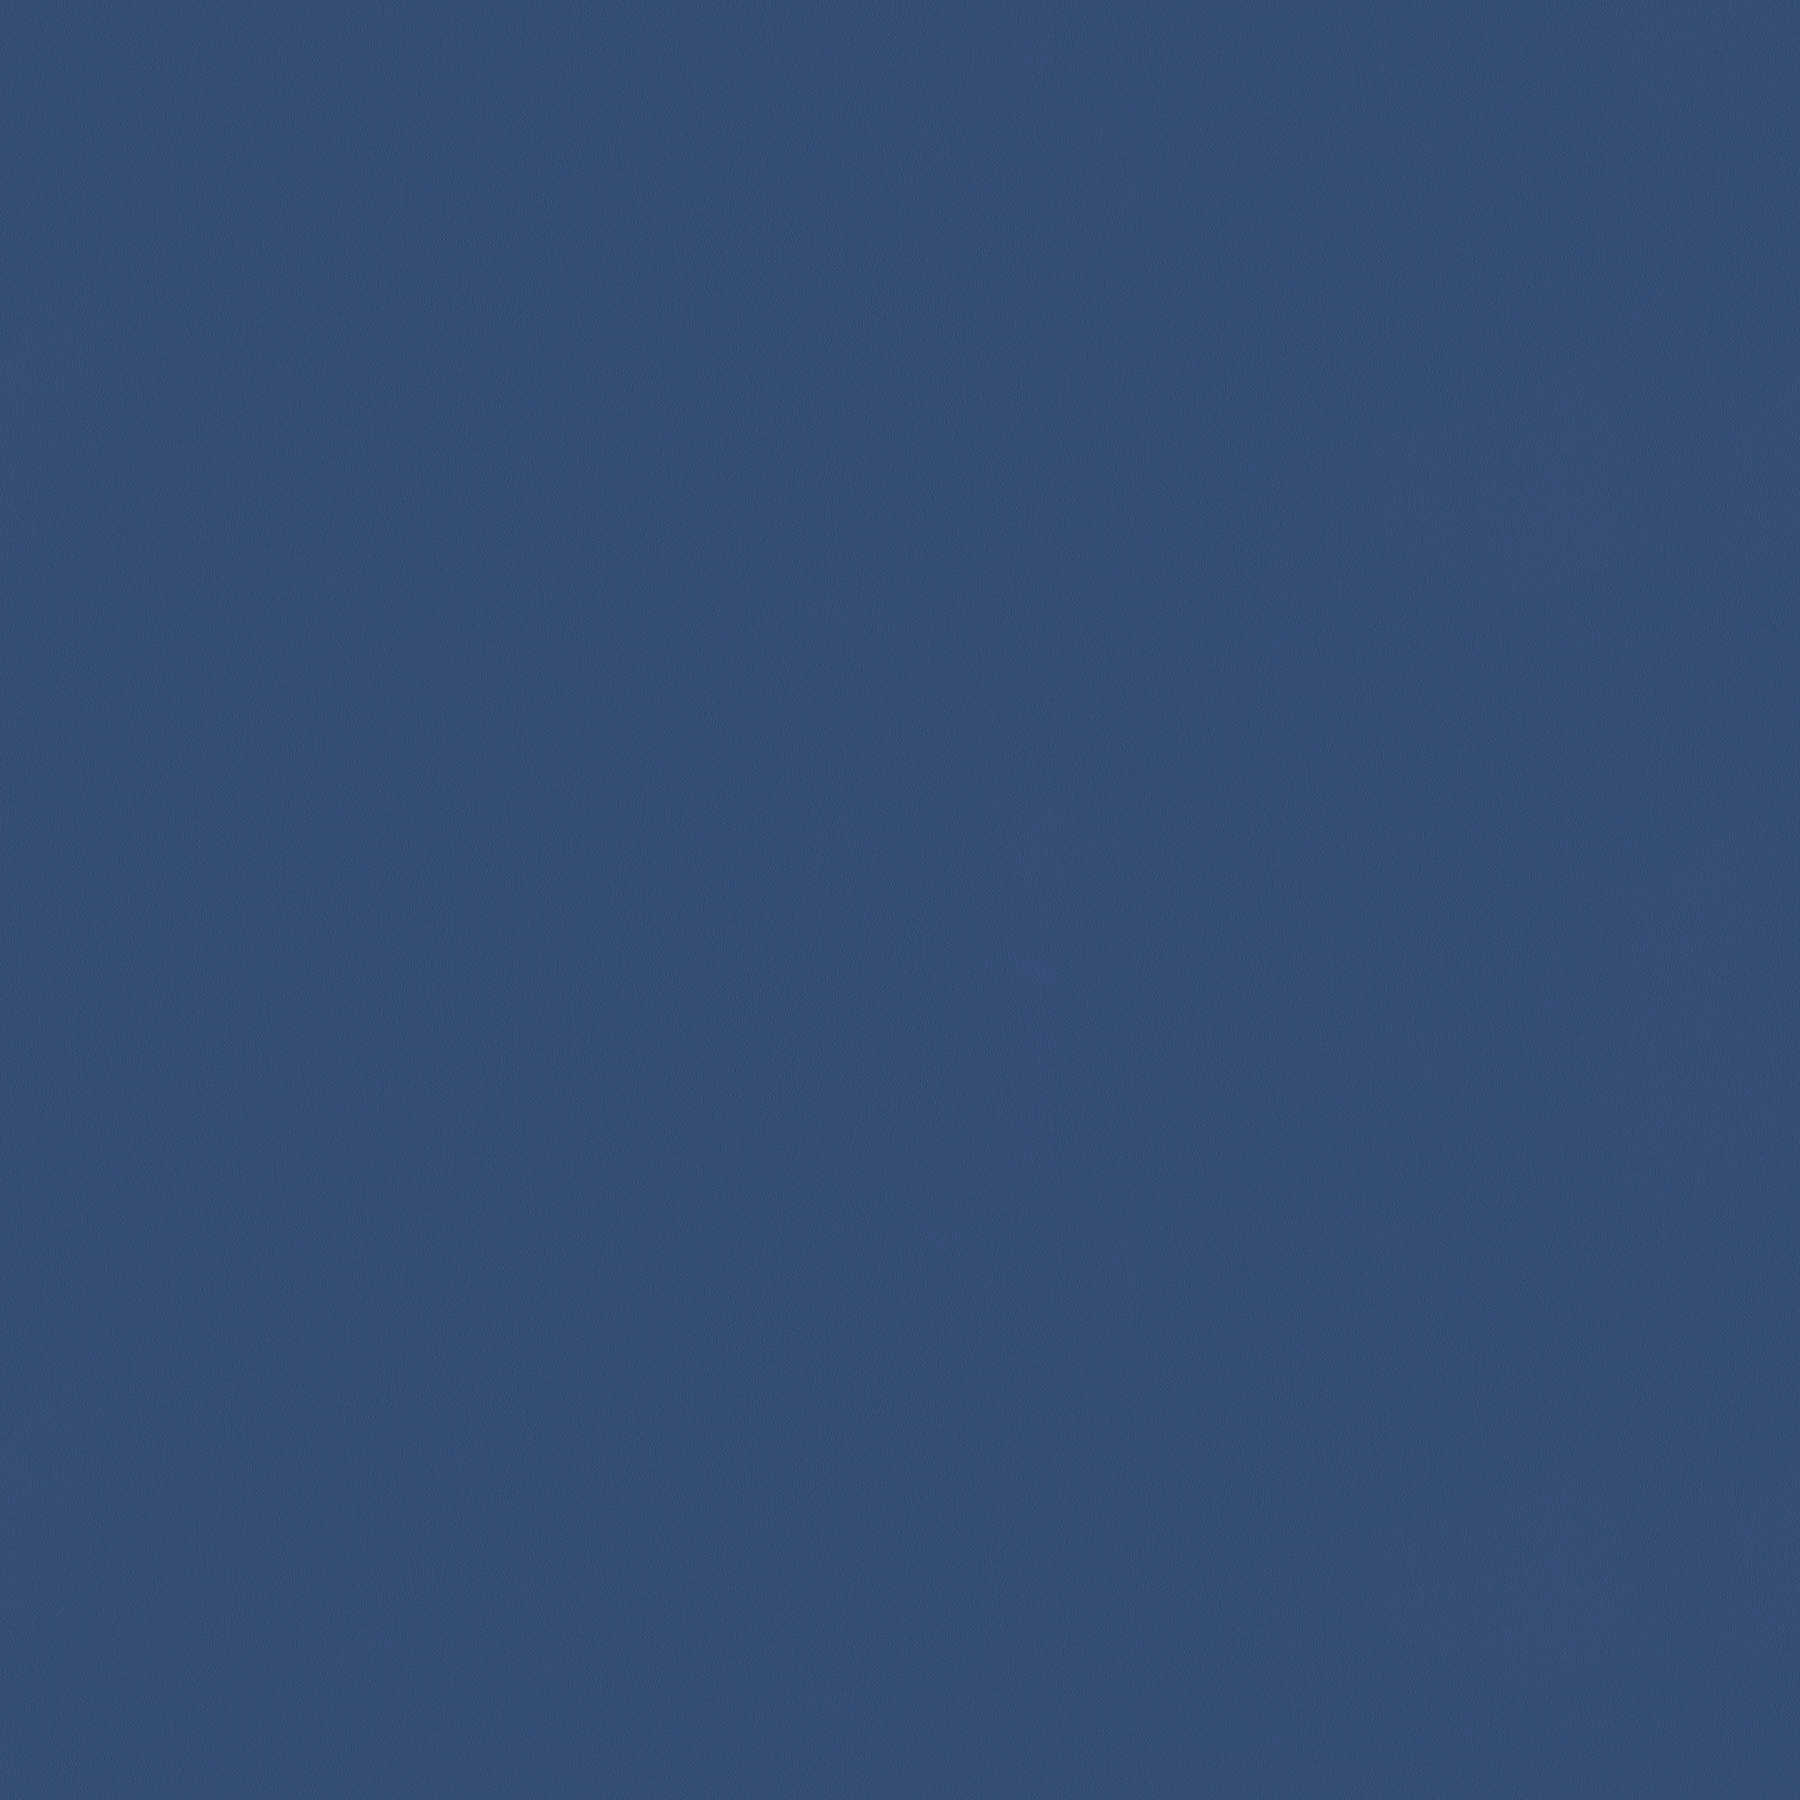 Tapete Marineblau, einfarbiges Vlies mit seidenmatt Finish – Blau
